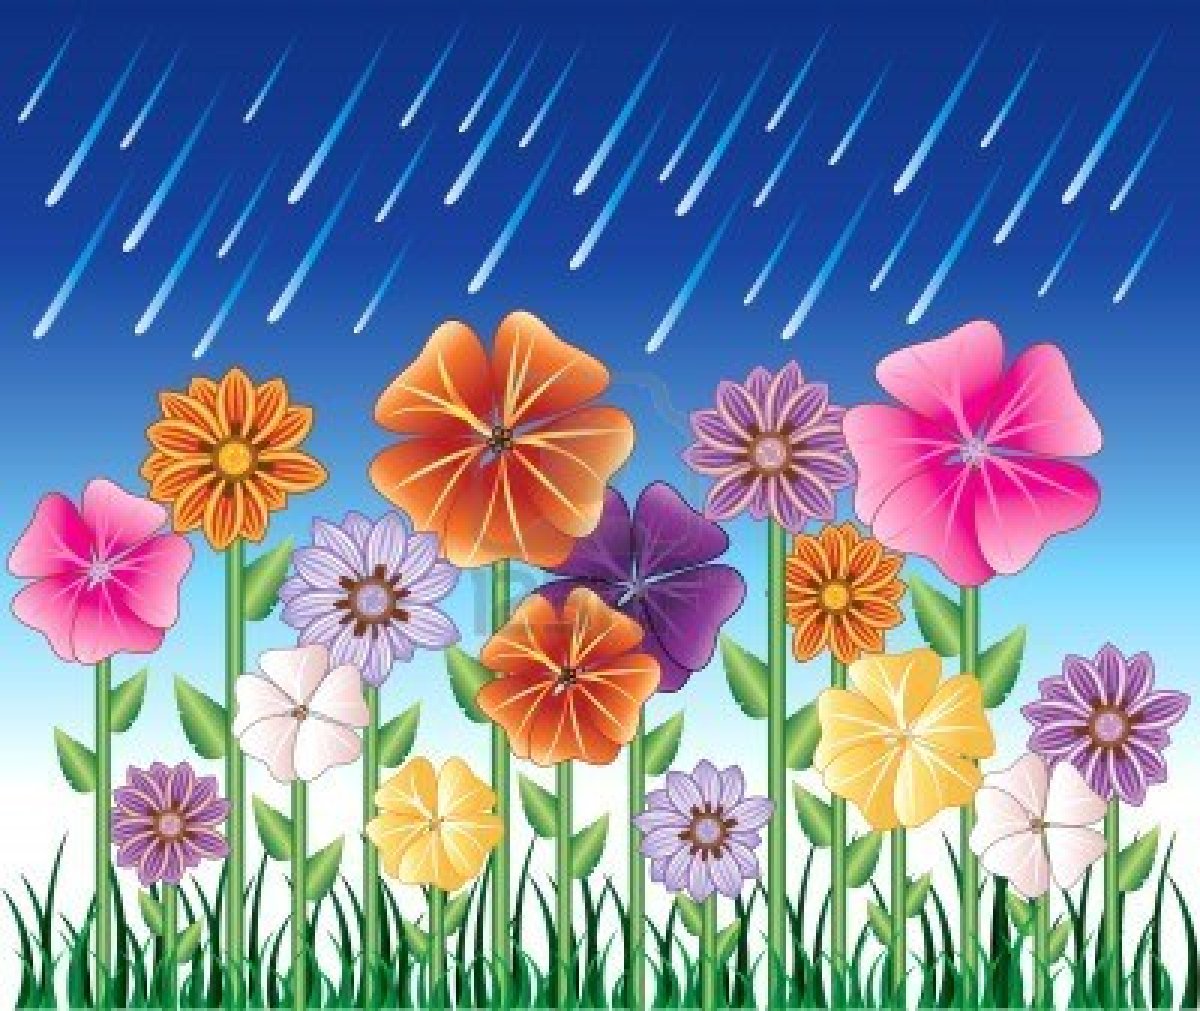 Rain Makes The Flowers Grow   Spring Ideas Activities   Pinterest